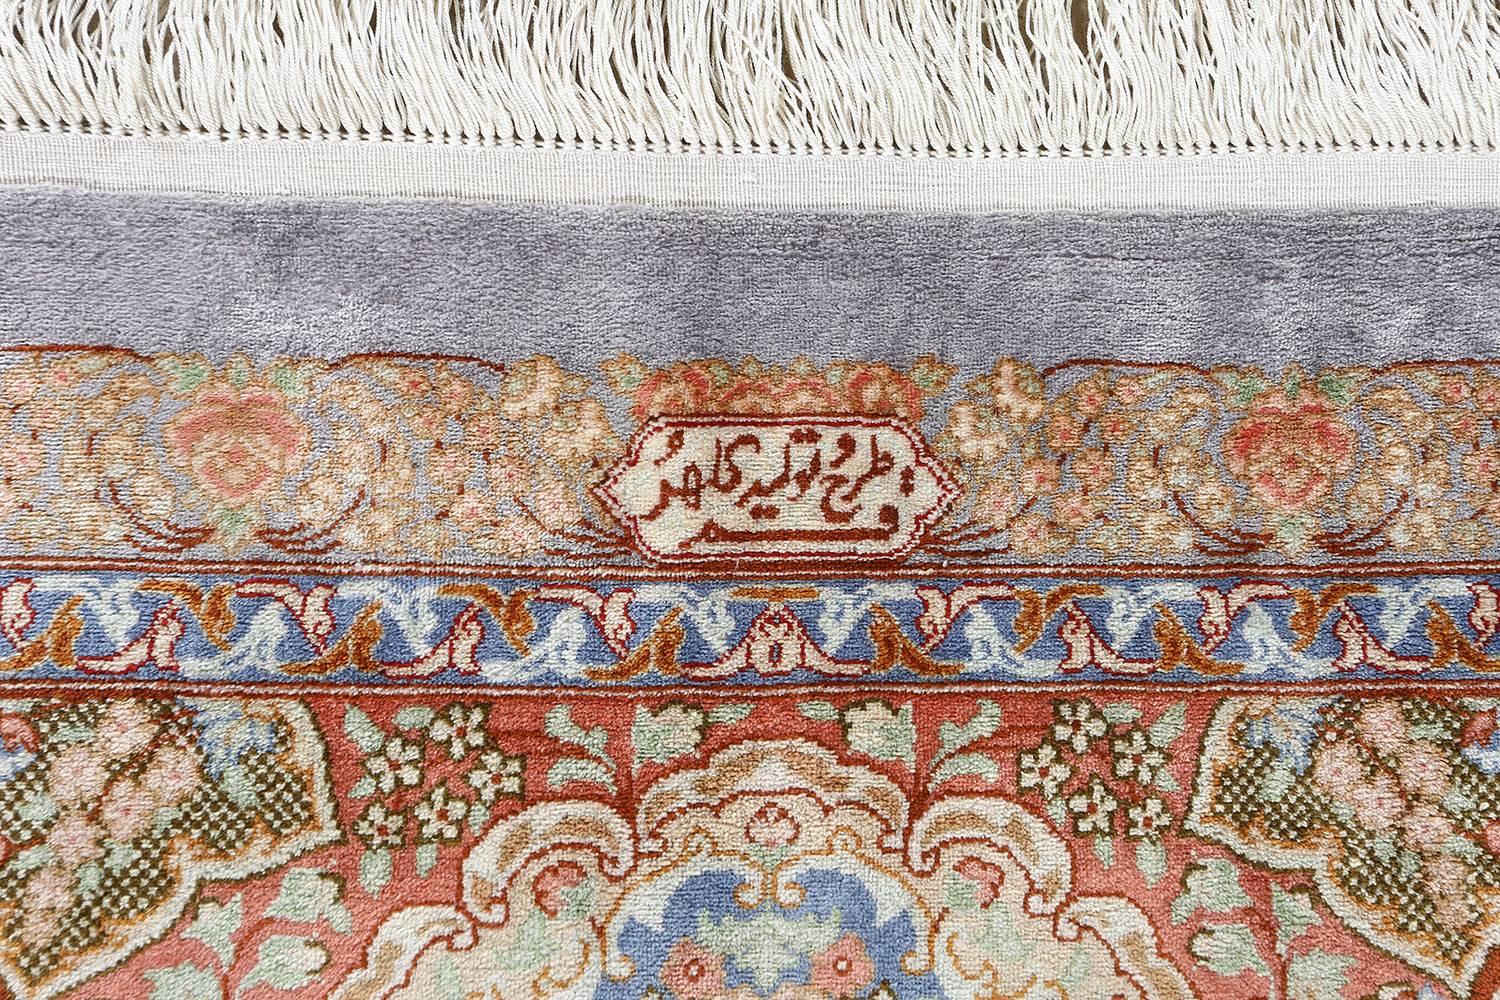 20th Century Fine Silk Vintage Qum Persian Rug.Size: 6 ft 6 in x 9 ft 11 in (1.98 m x 3.02 m)